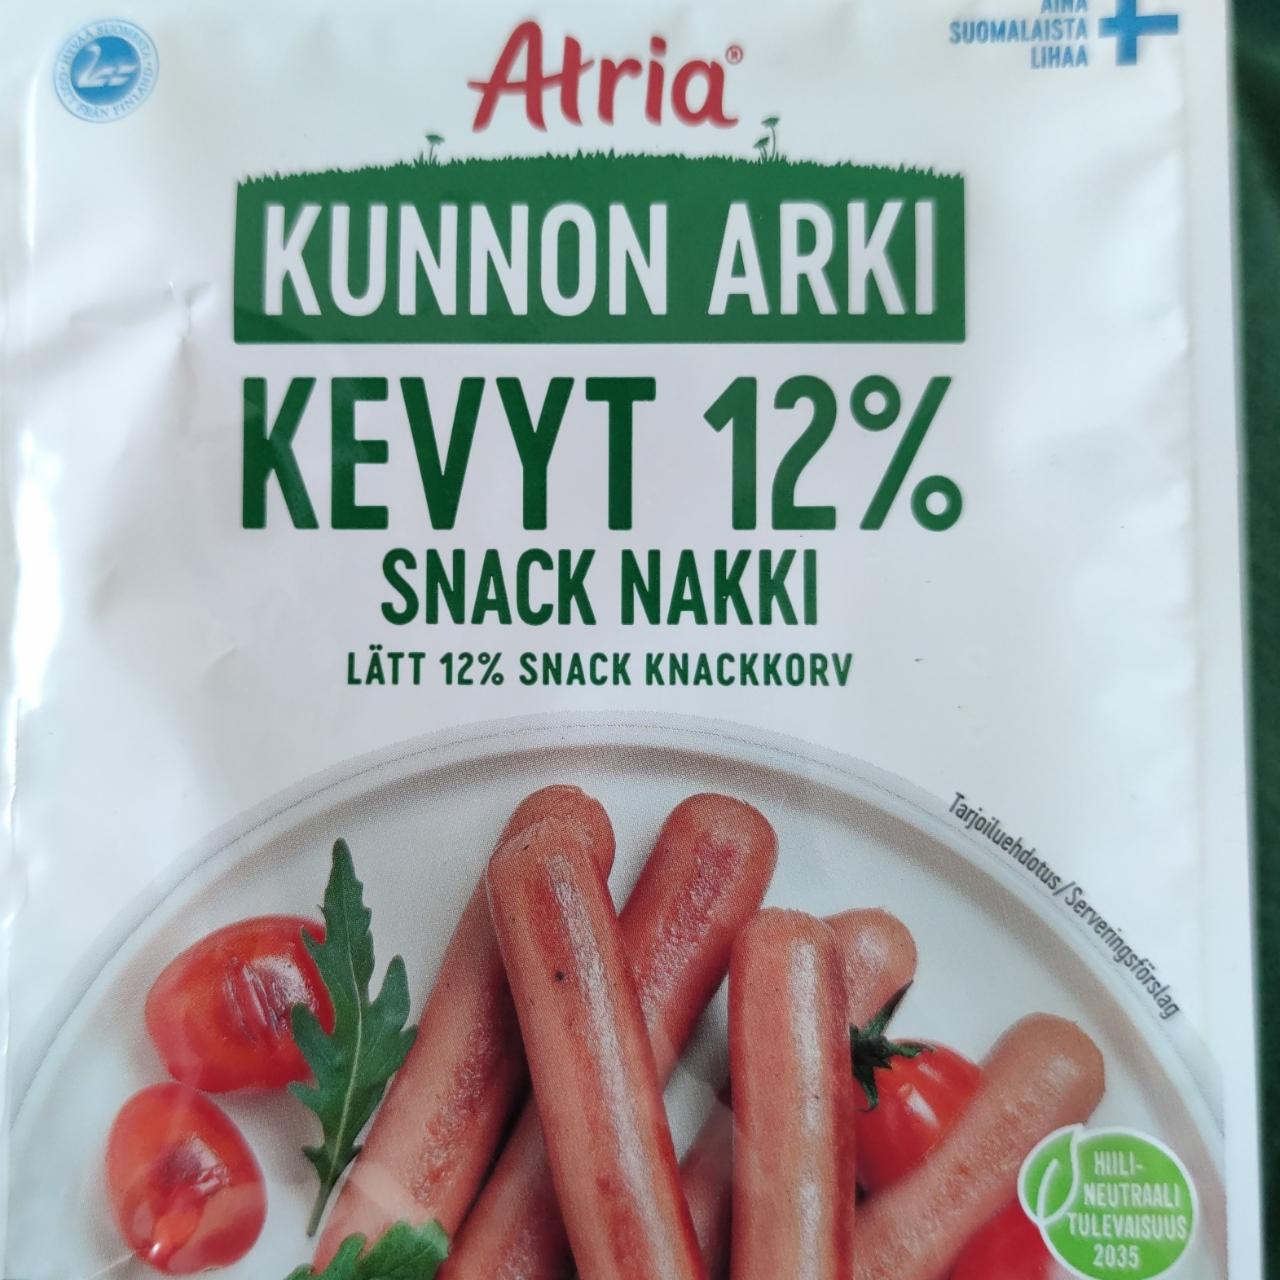 Fotografie - Kunnon arki Kevyt 12% Snack nakki Atria